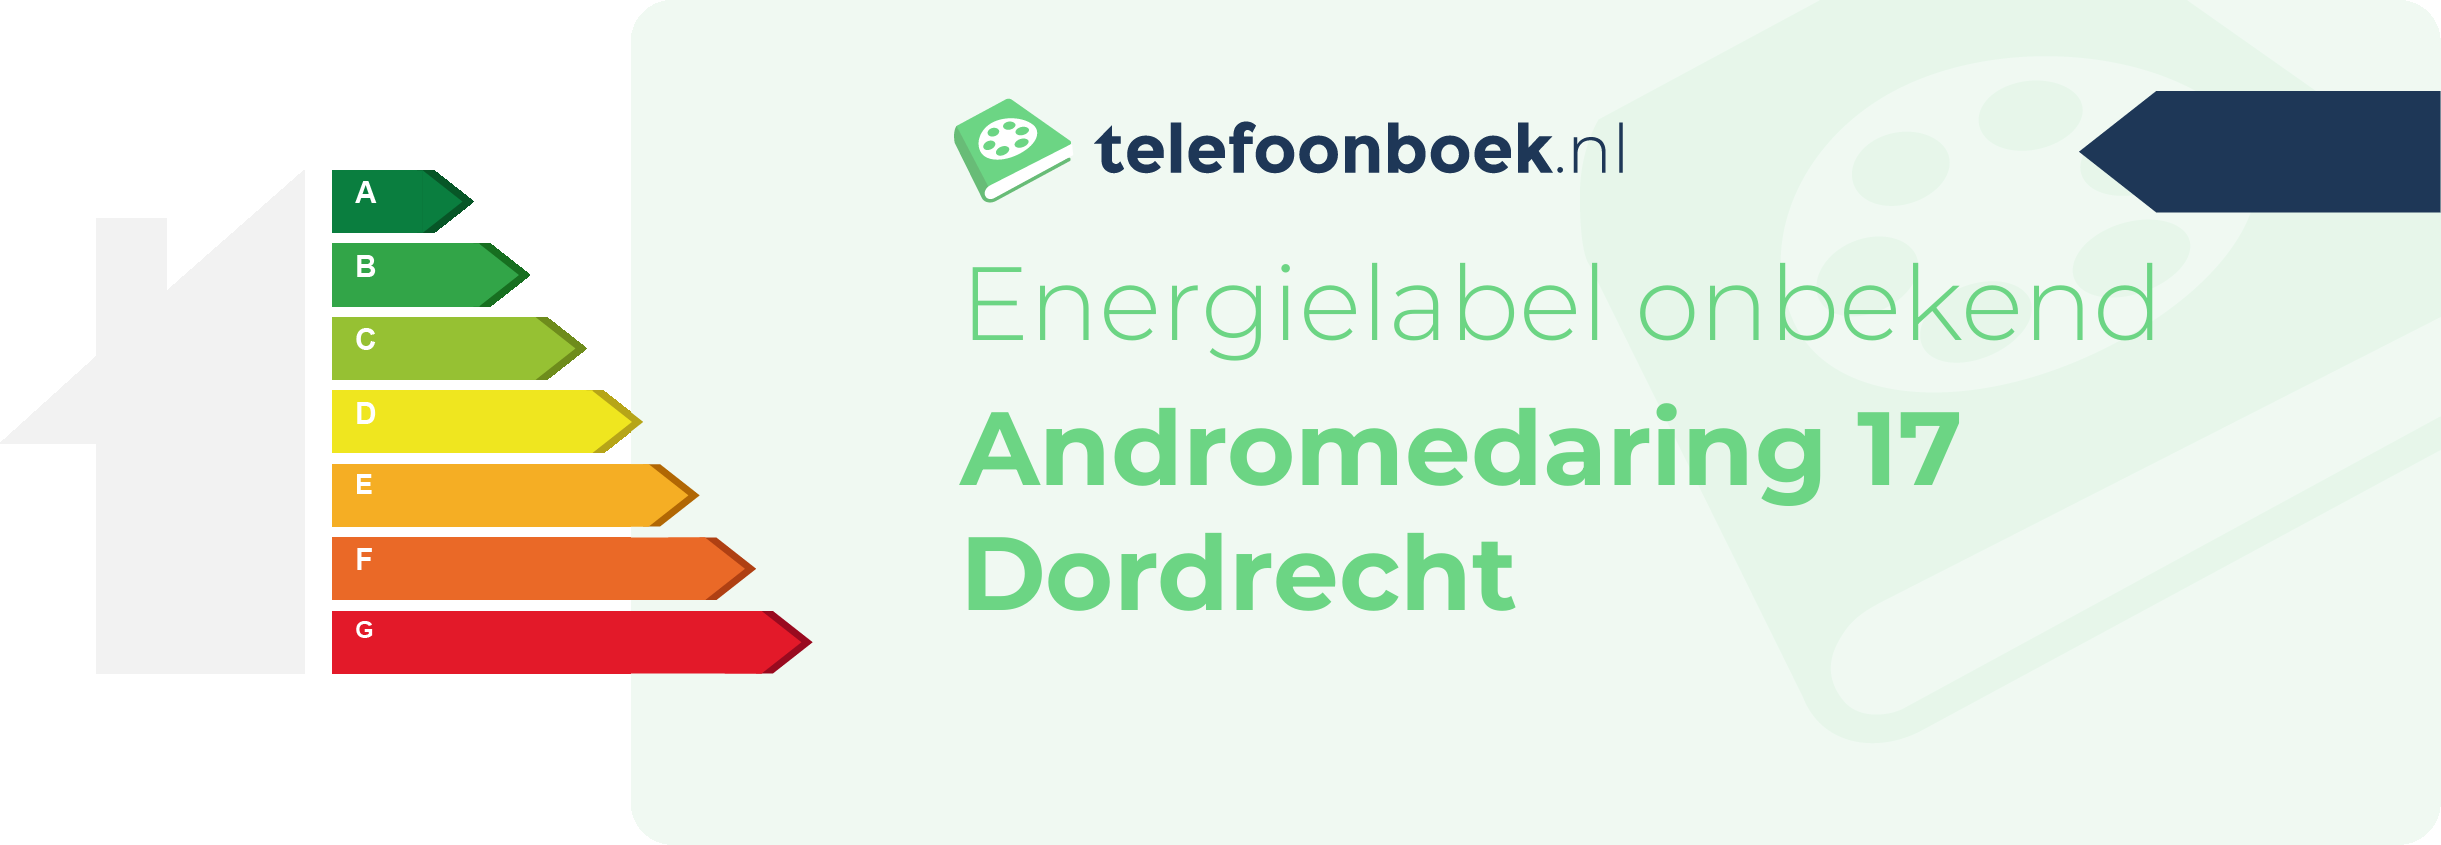 Energielabel Andromedaring 17 Dordrecht